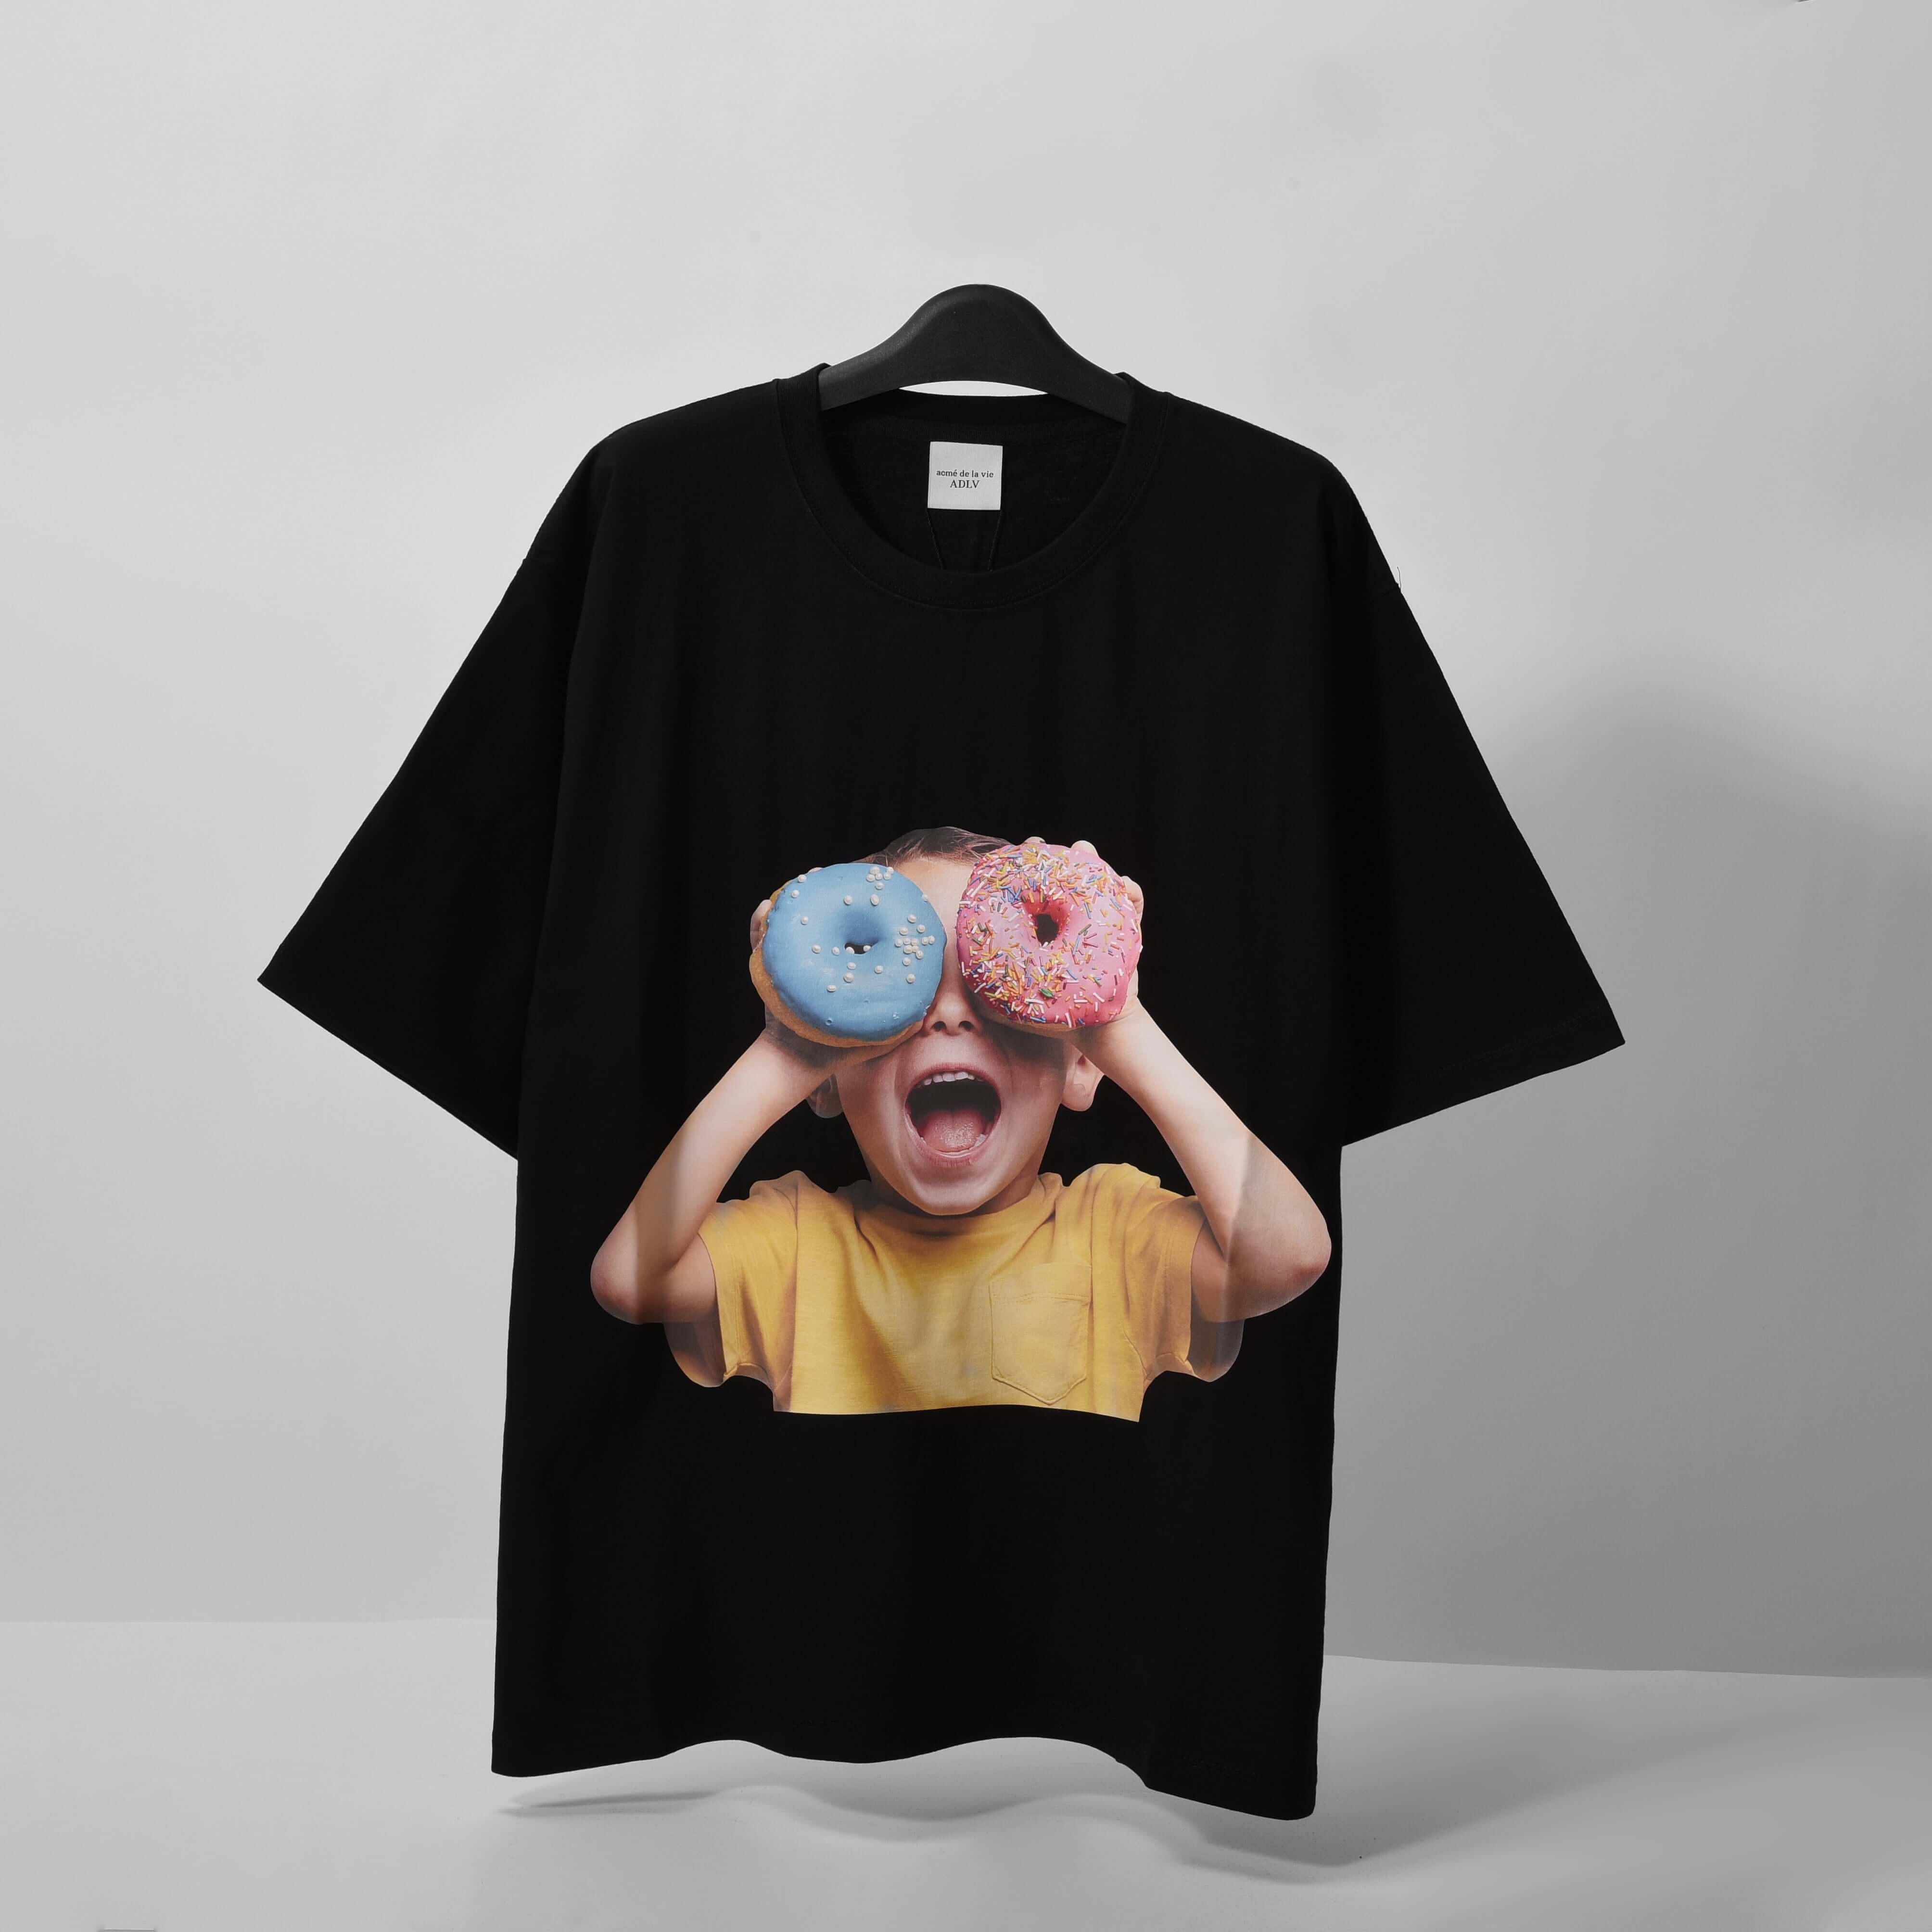 ADLV Baby Face Short Sleeve Donut 5 Tshirt - Black